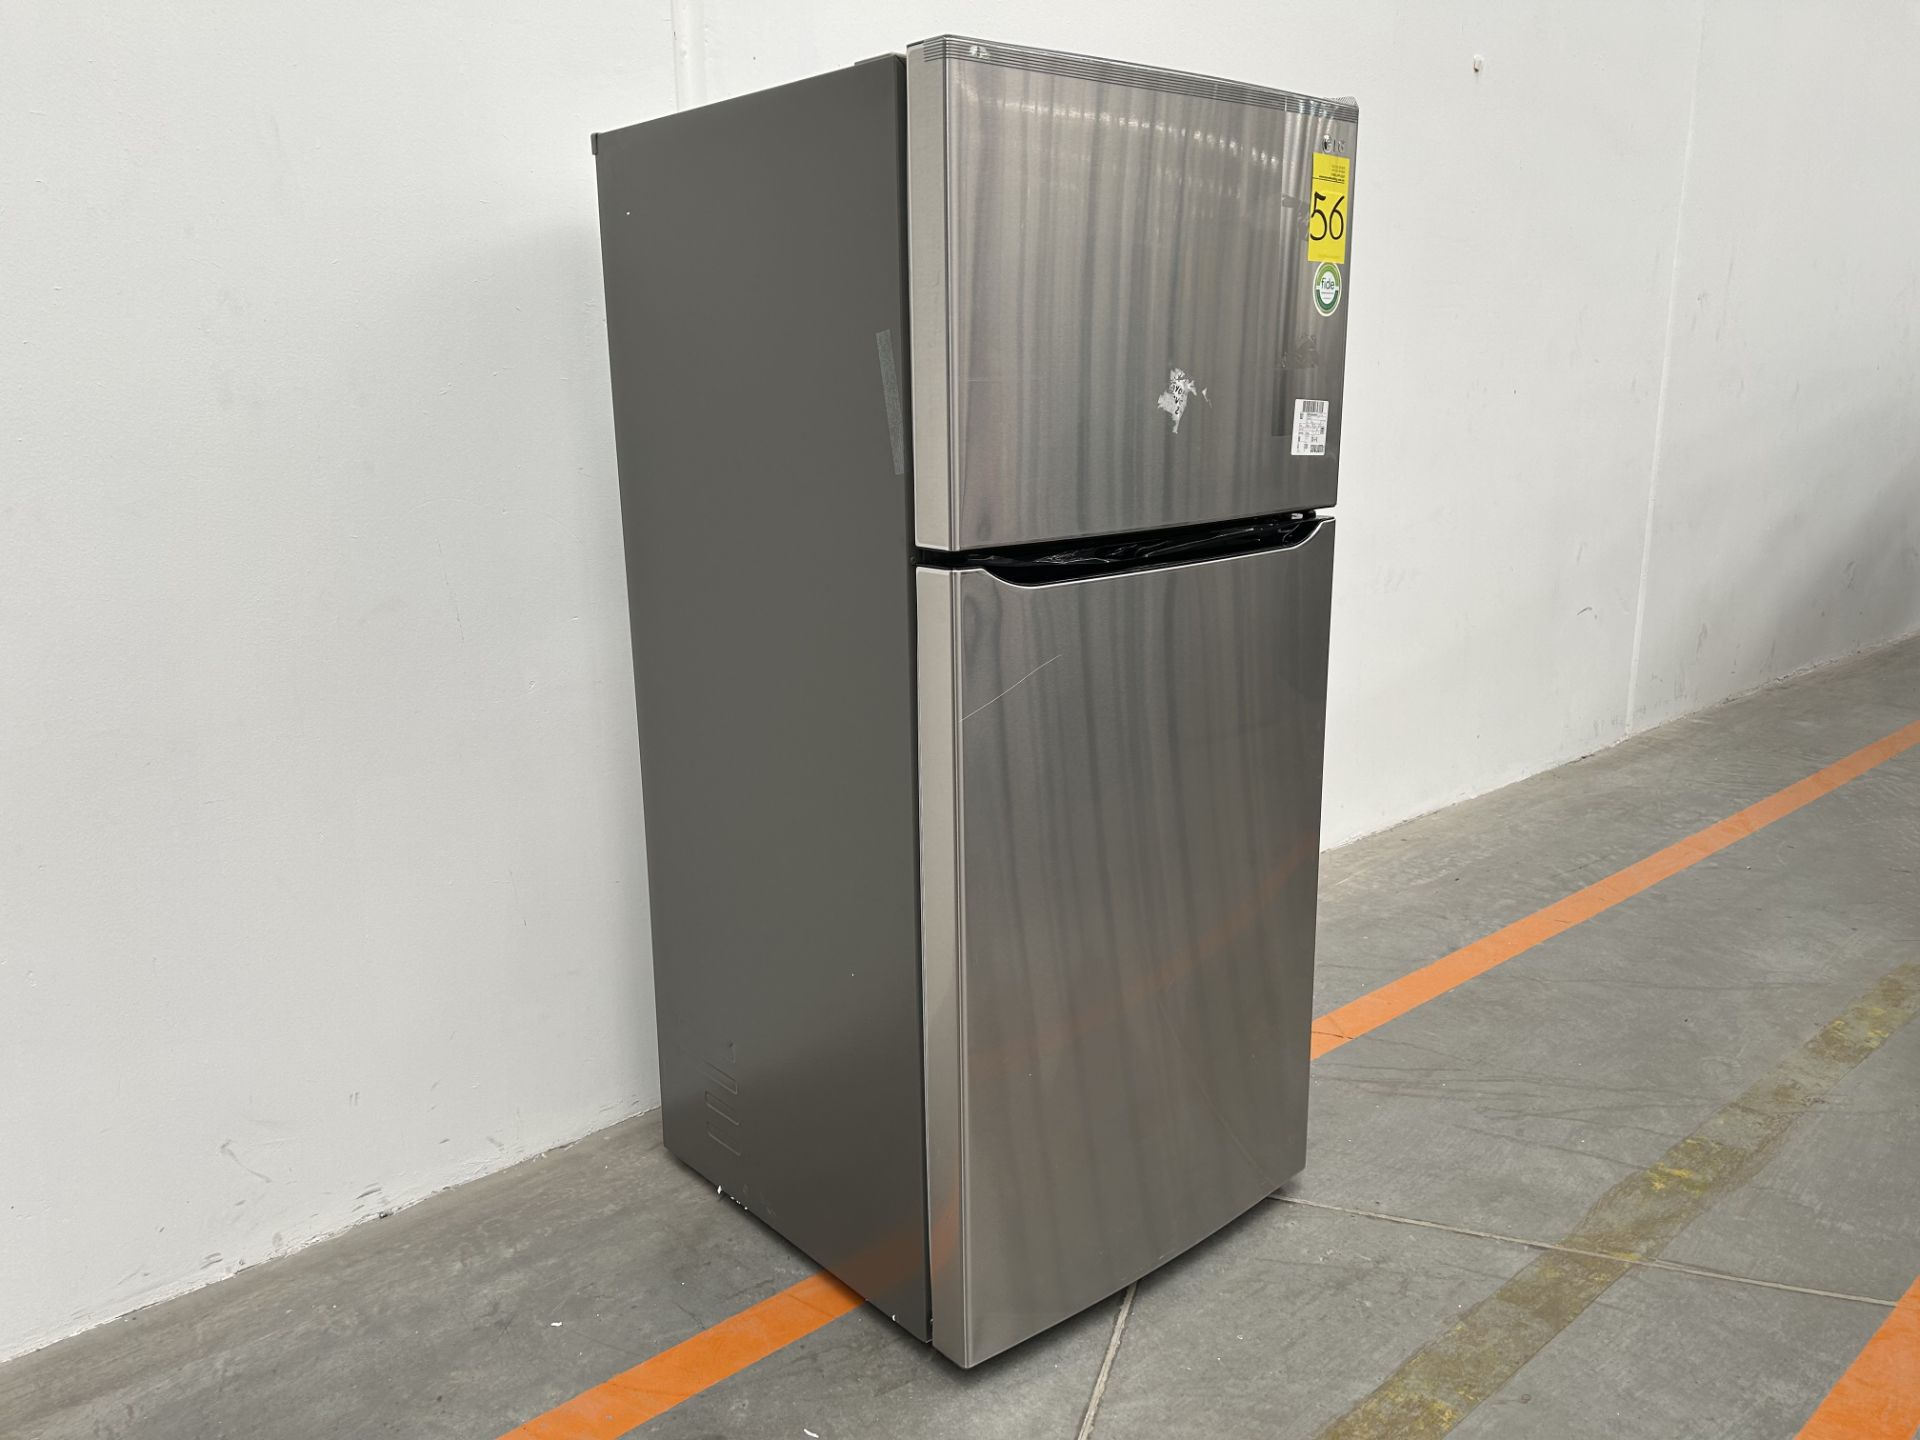 (NUEVO) Refrigerador Marca LG, Modelo LT57BPSX, Serie 1N111, Color GRIS - Image 3 of 5